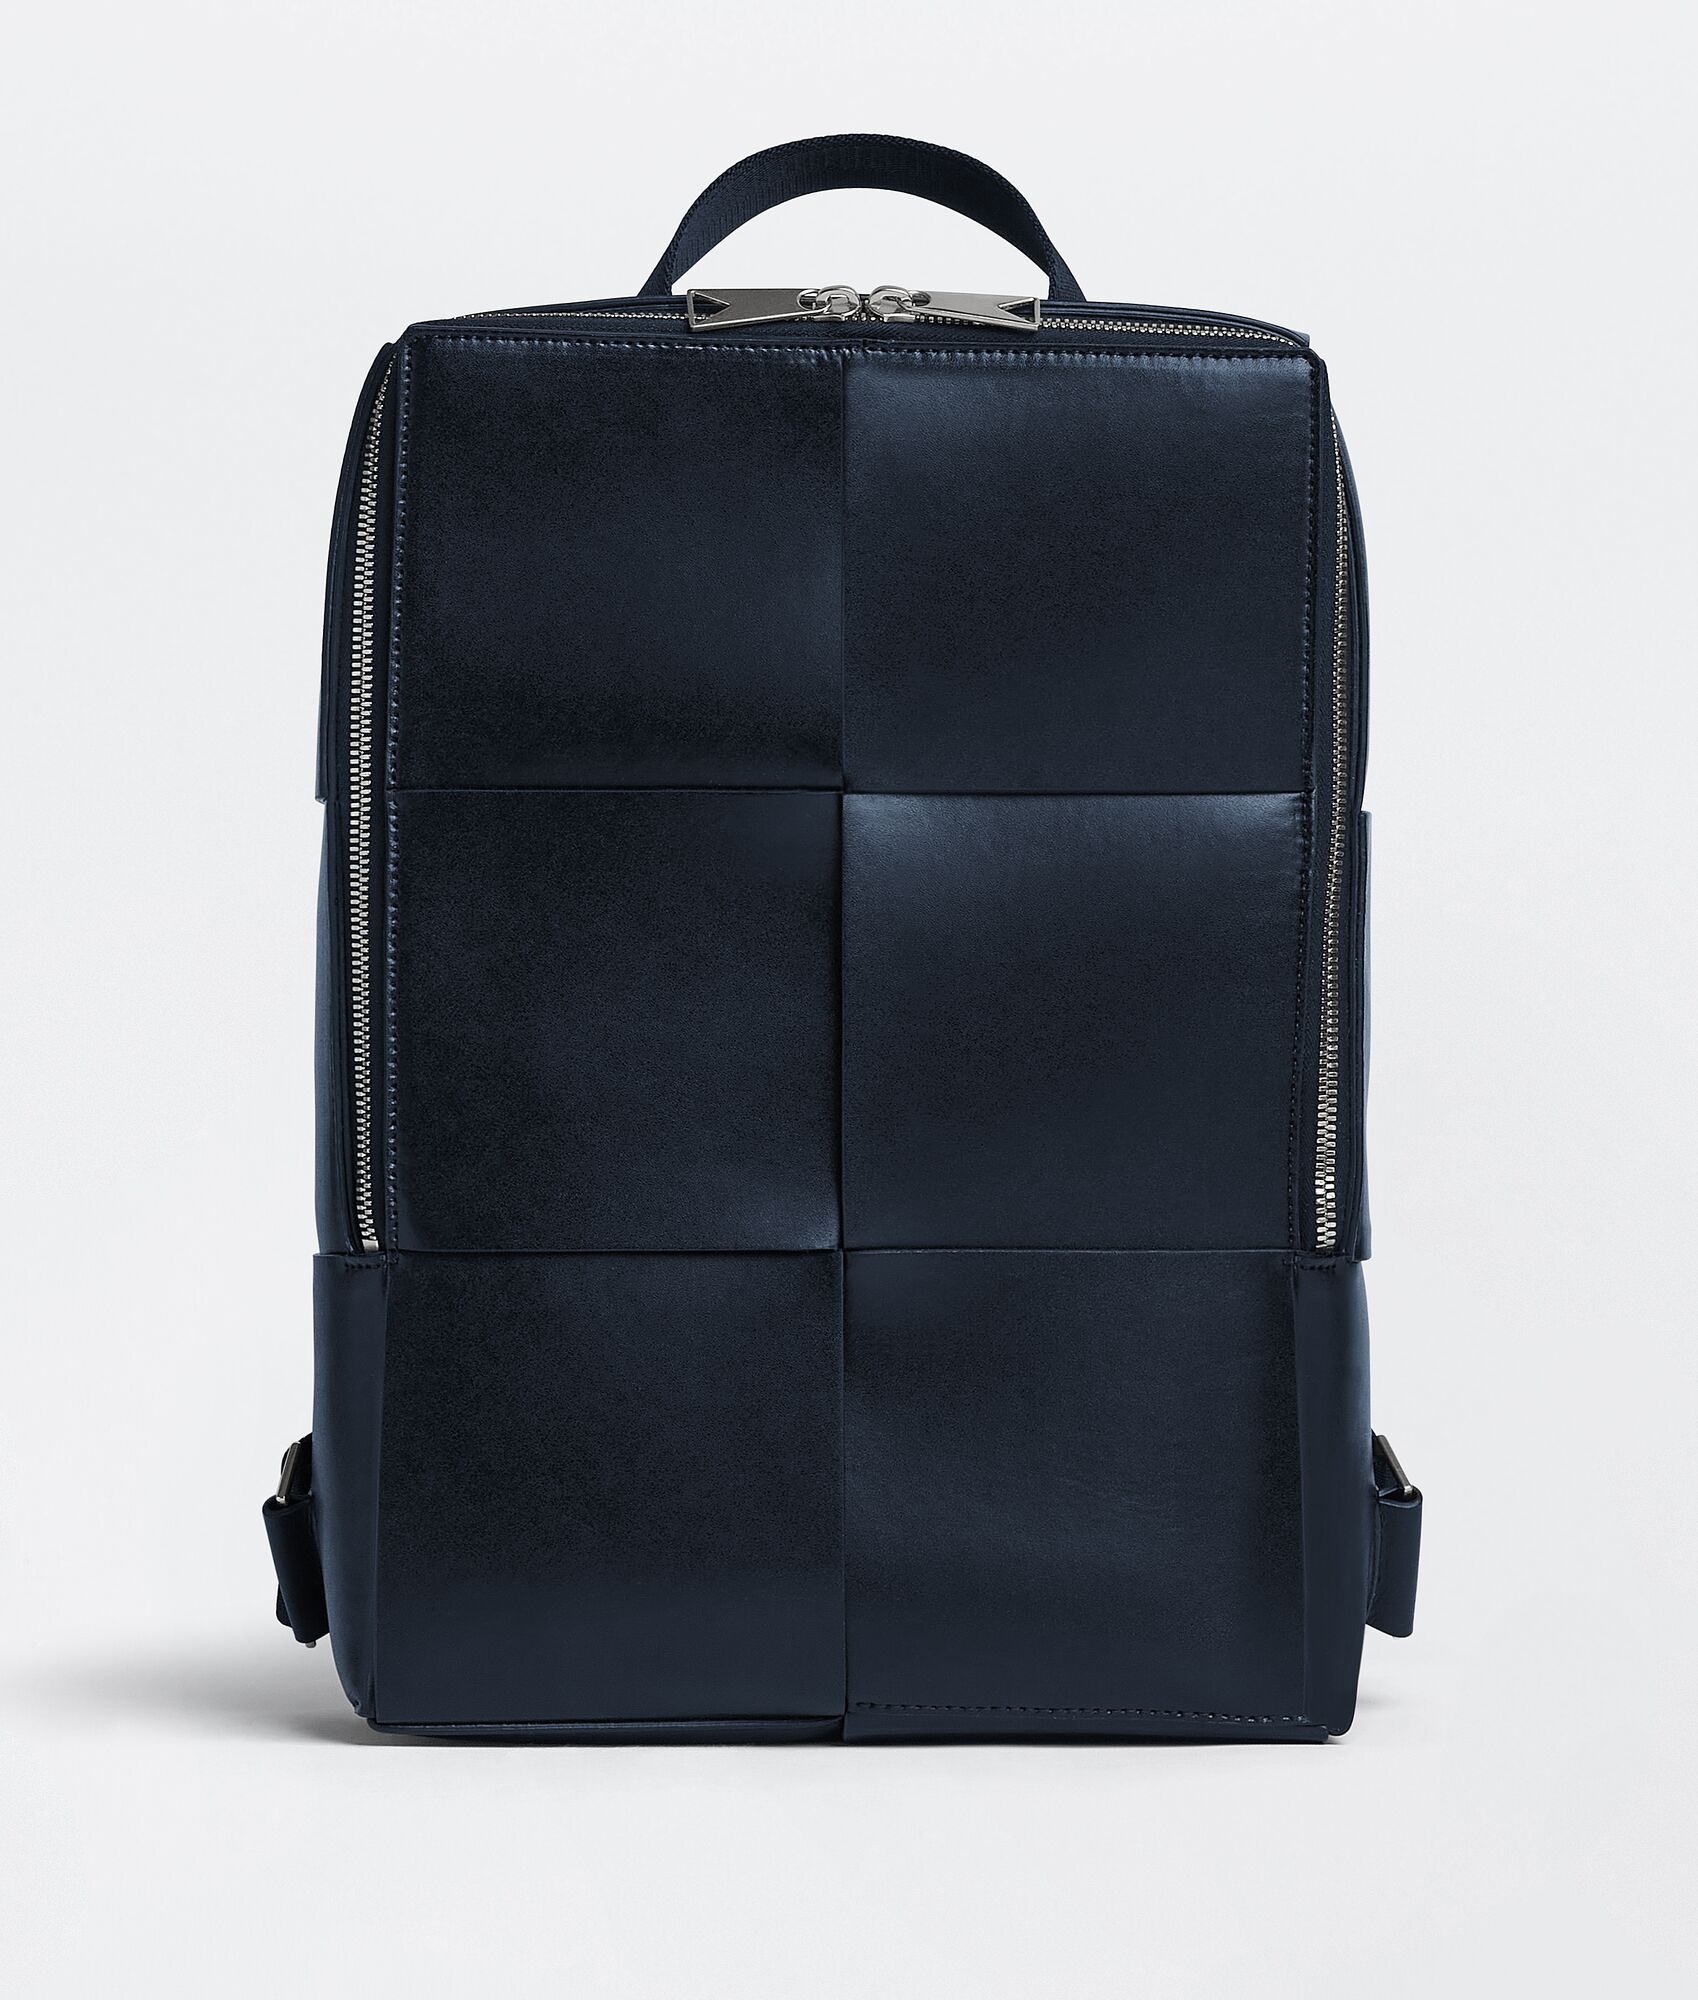 arco backpack - 1